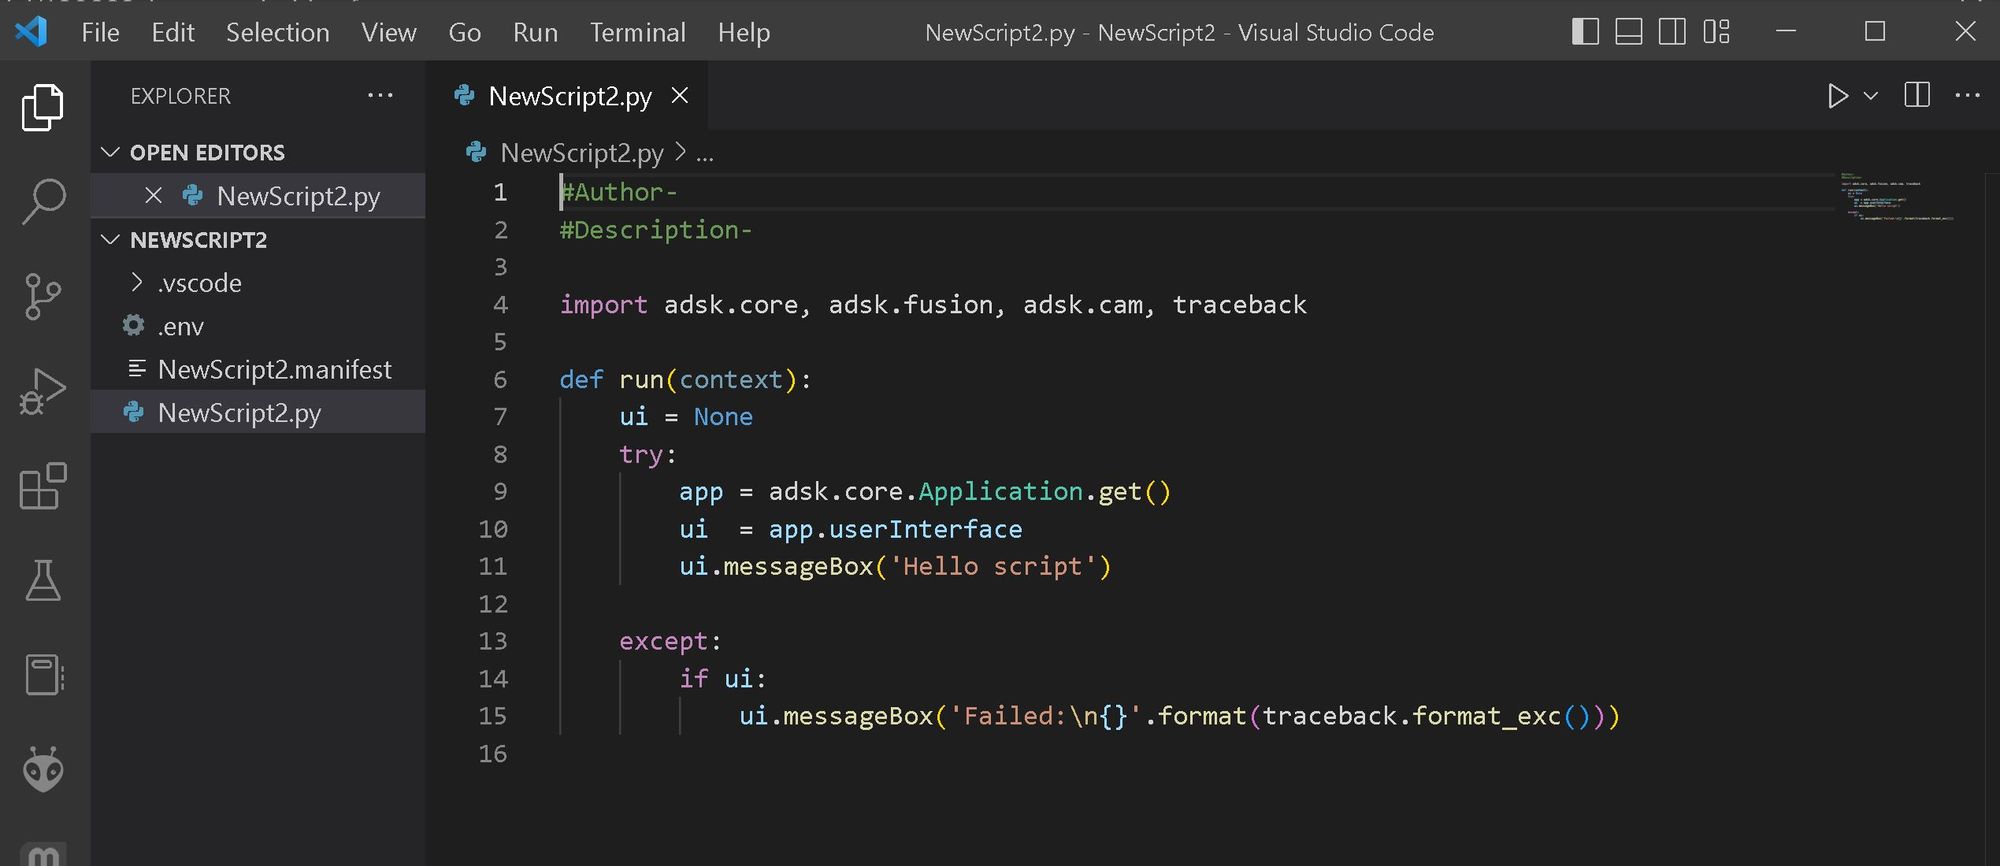 A screenshot of Visual Studio Code showing an example Python code